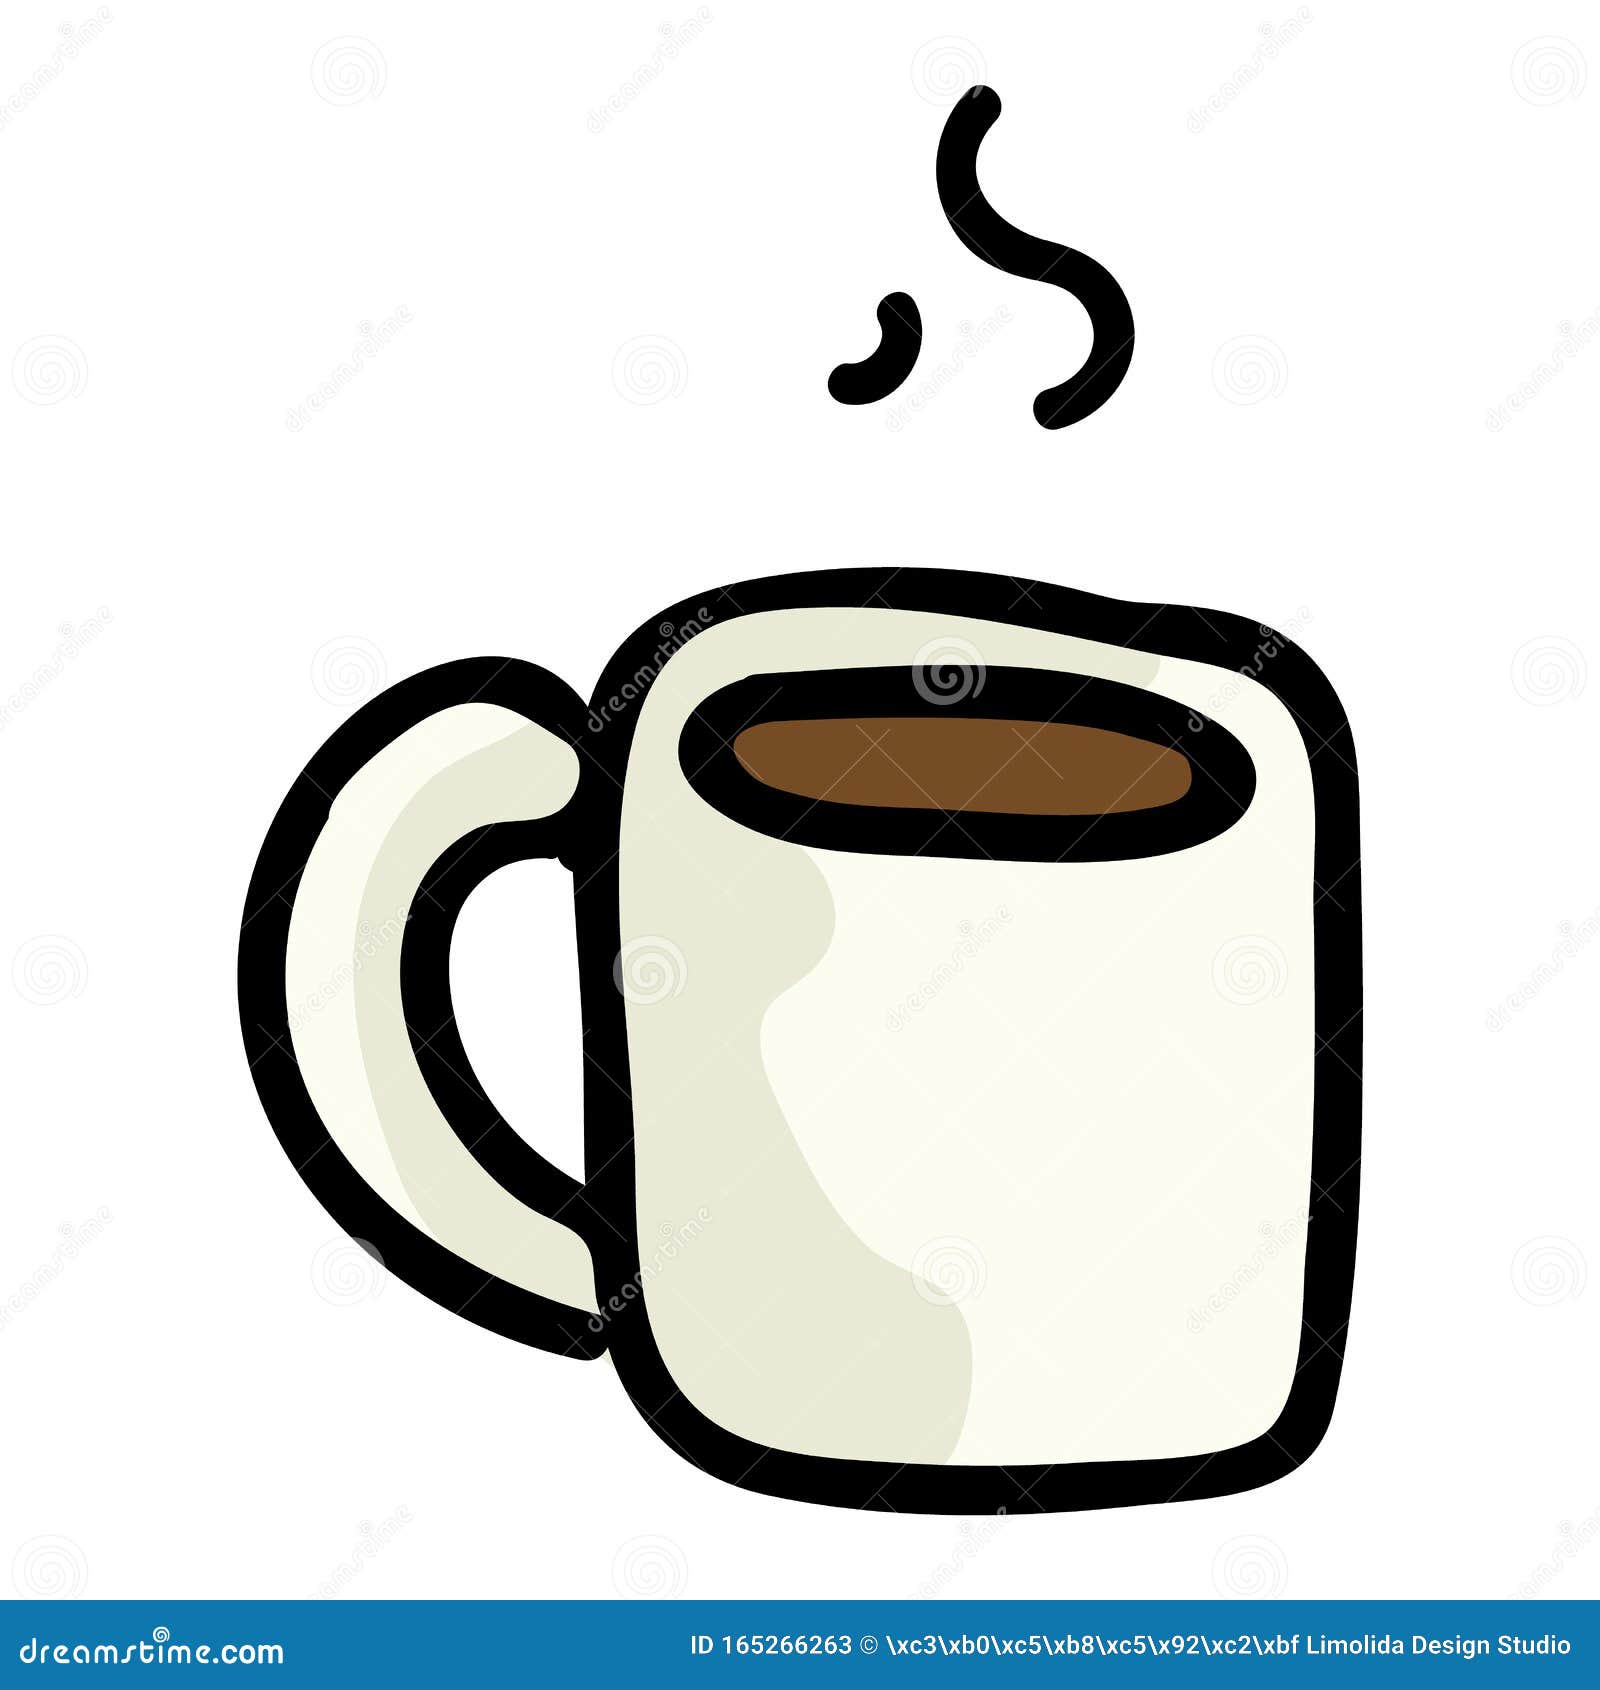 Cute Coffee Mug Cartoon Vector Illustration. Hand Drawn Hot Drink Element  Clip Art for Kitchen Concept Stock Illustration - Illustration of card,  kitchen: 165266263